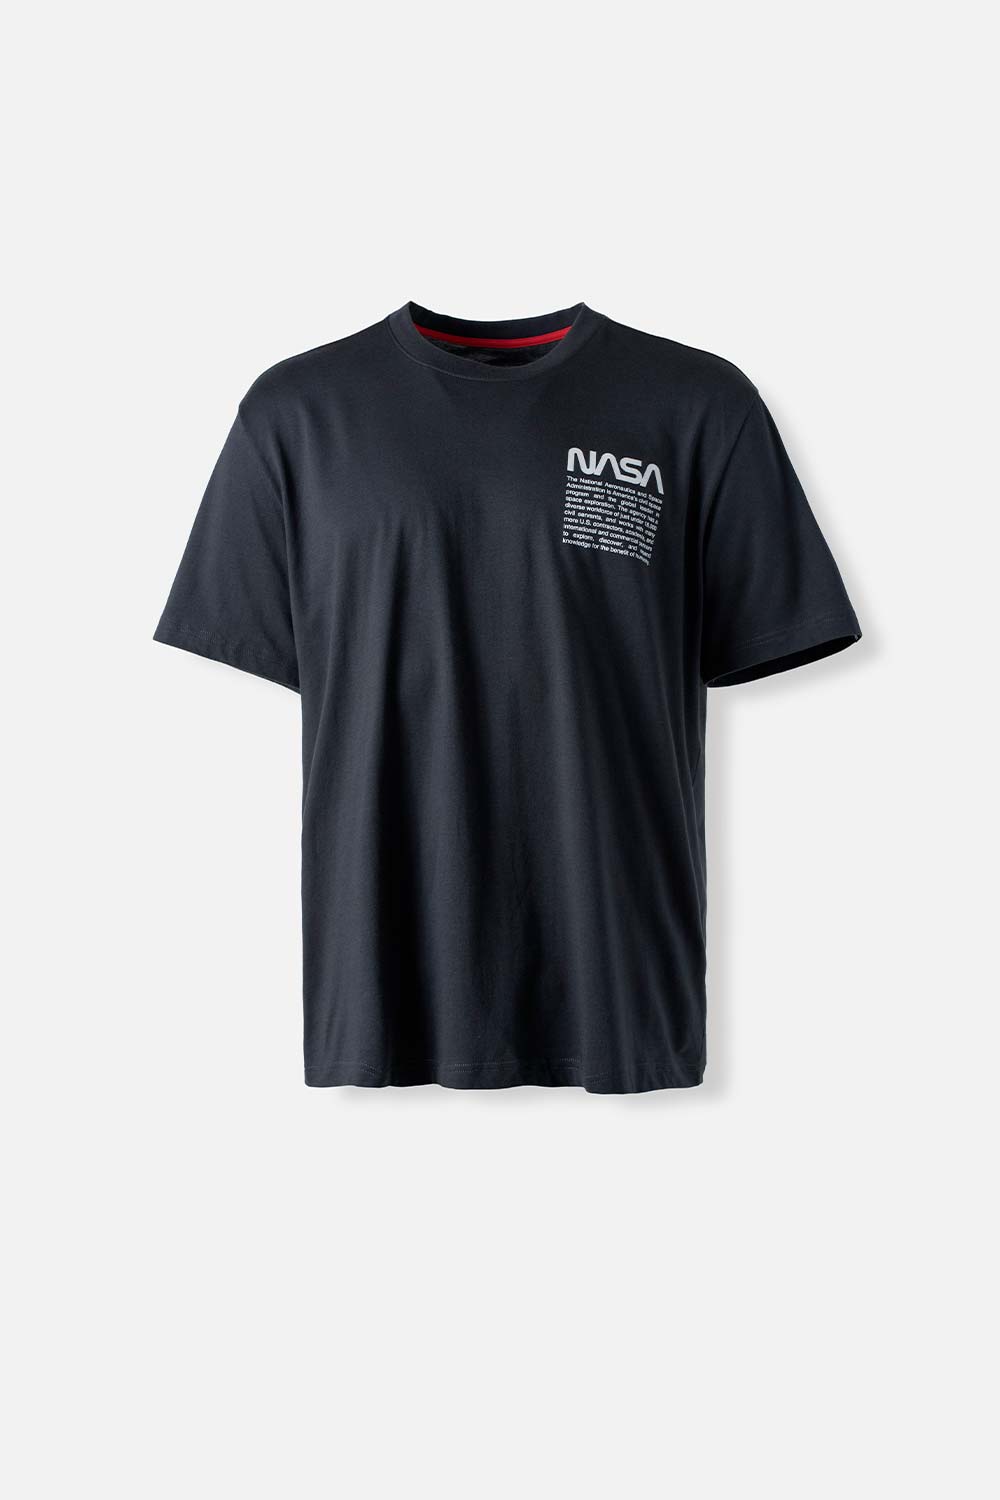 Camiseta de la Nasa gris manga corta para hombre S-0